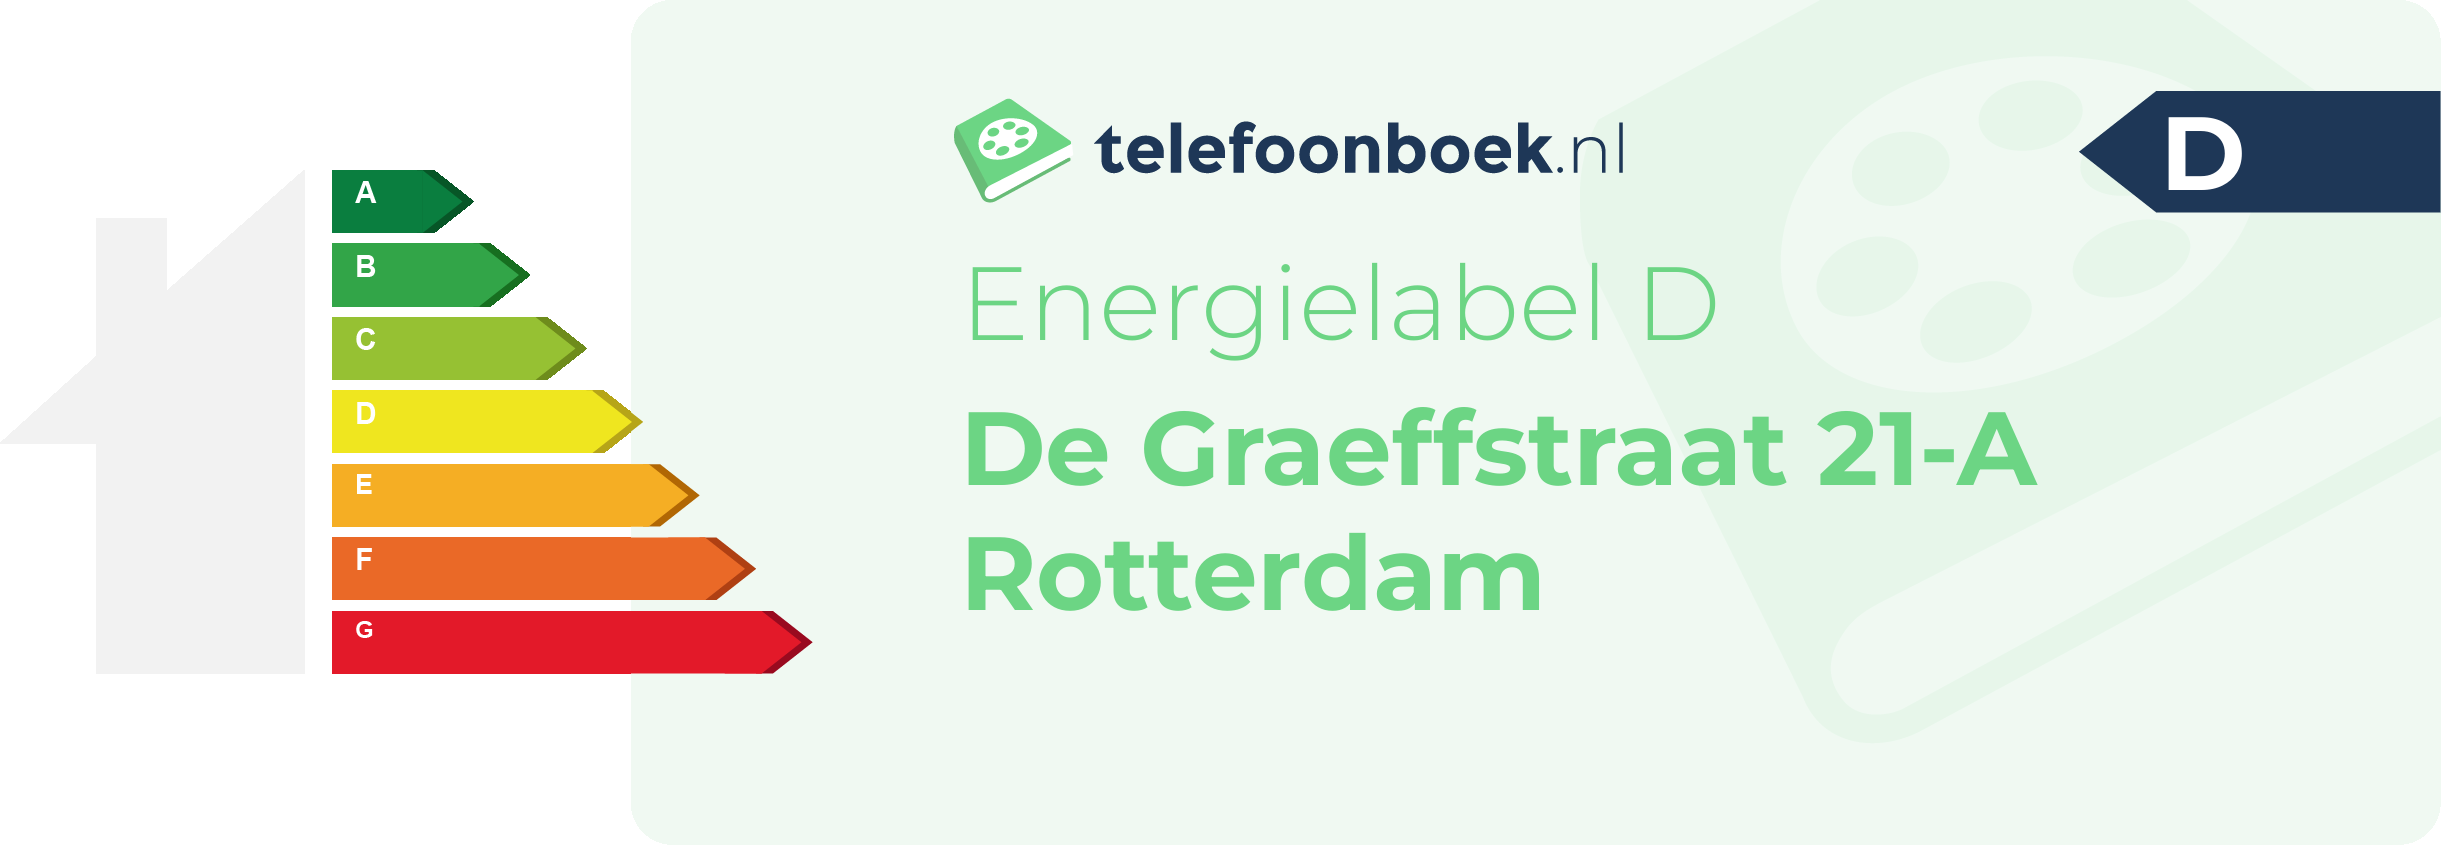 Energielabel De Graeffstraat 21-A Rotterdam